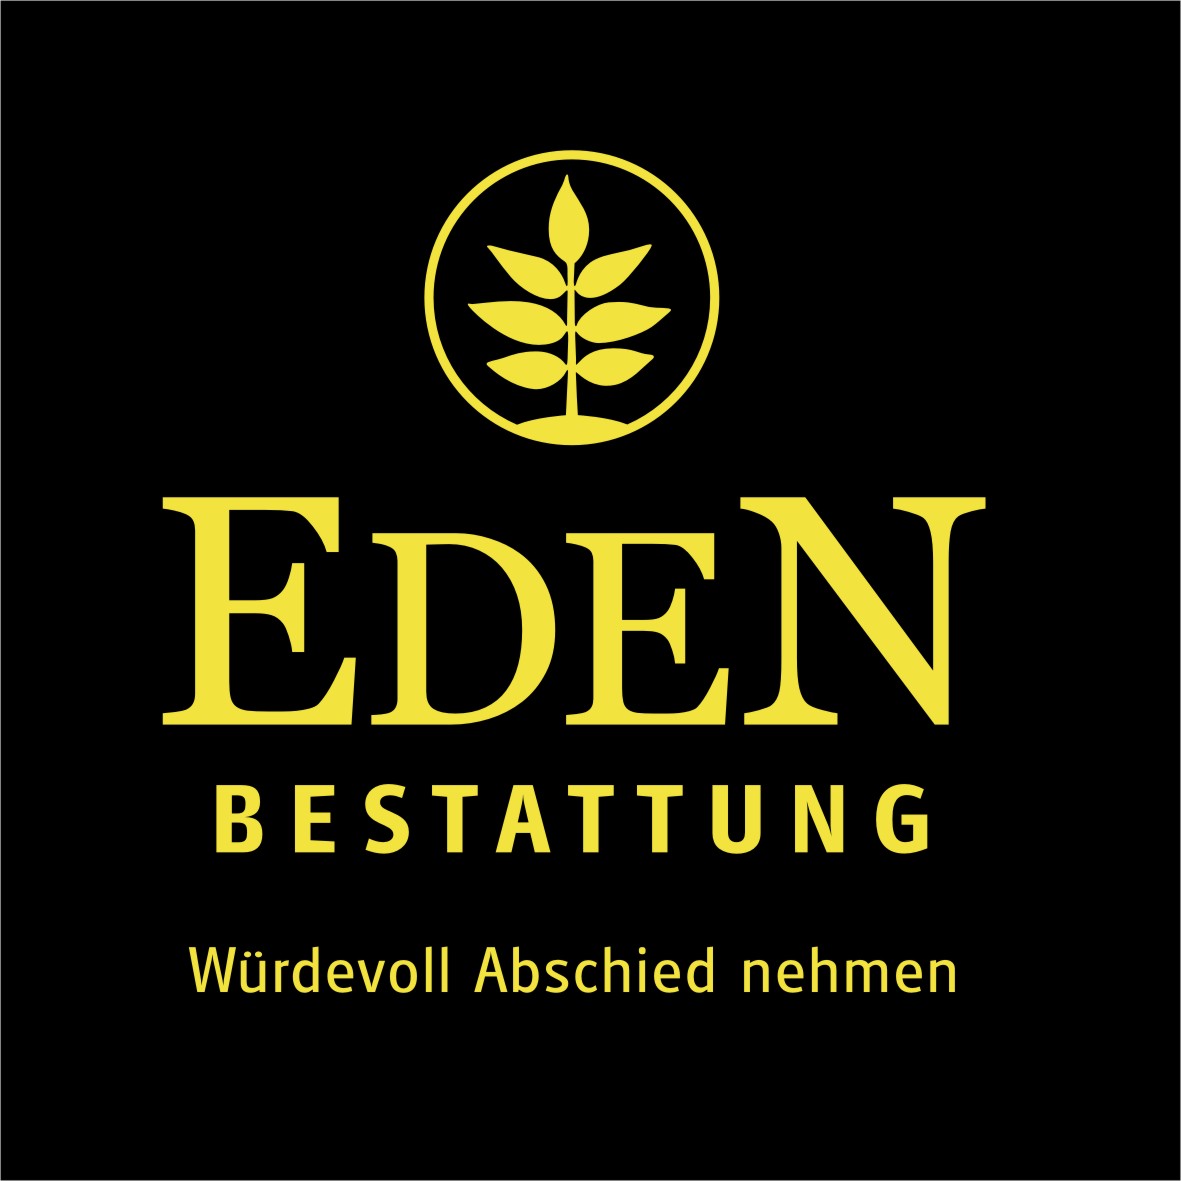 Bestattung Eden Rudersdorf Logo